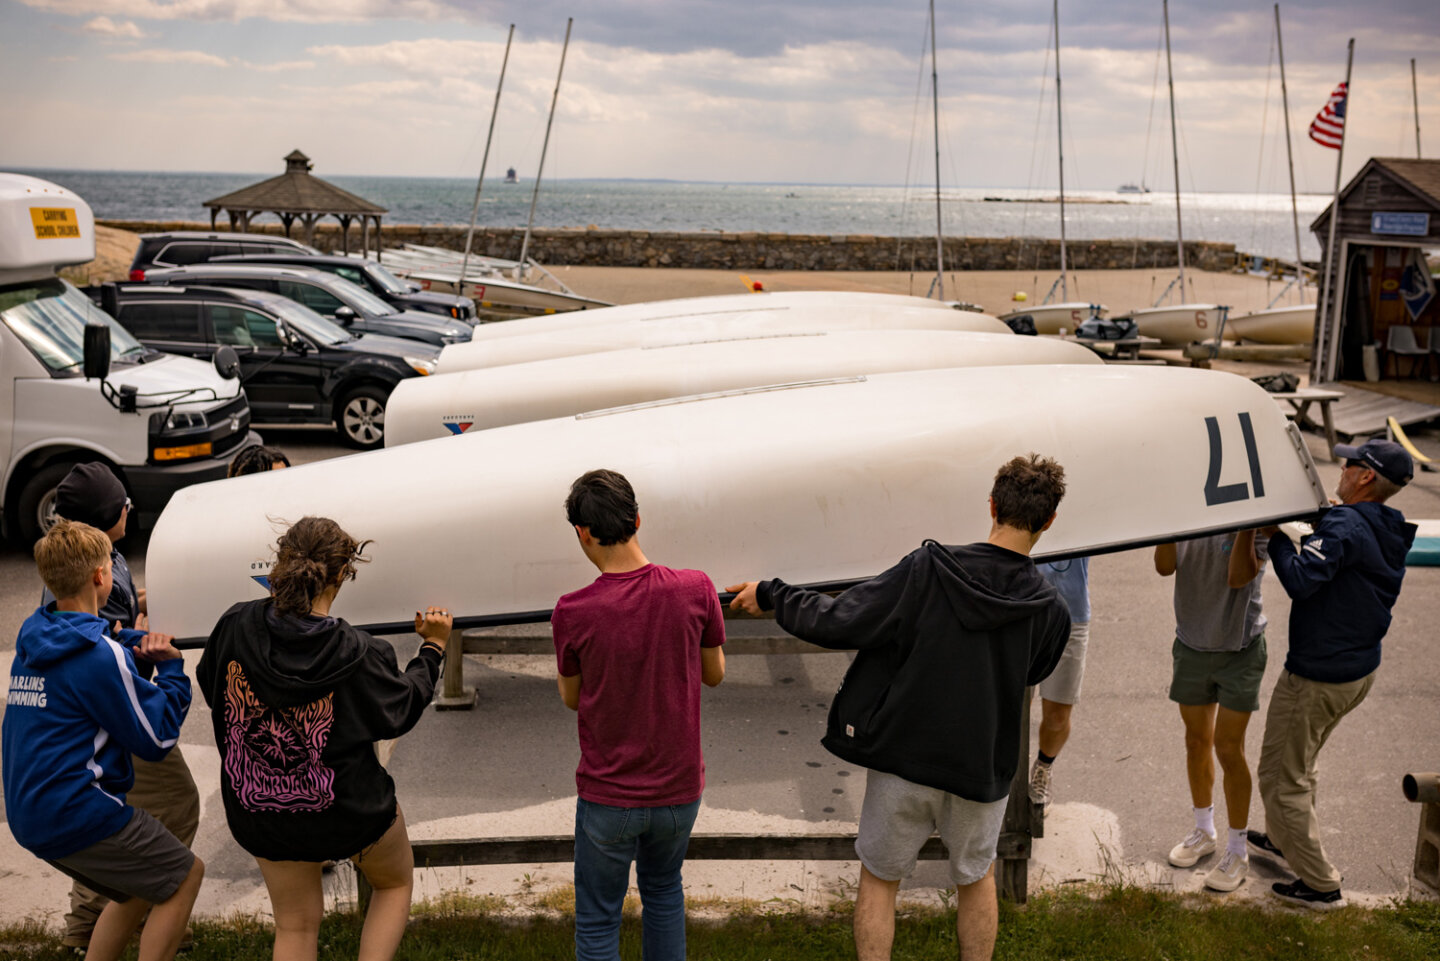 Williams sailing students help coach lift boat off of rack at the marina